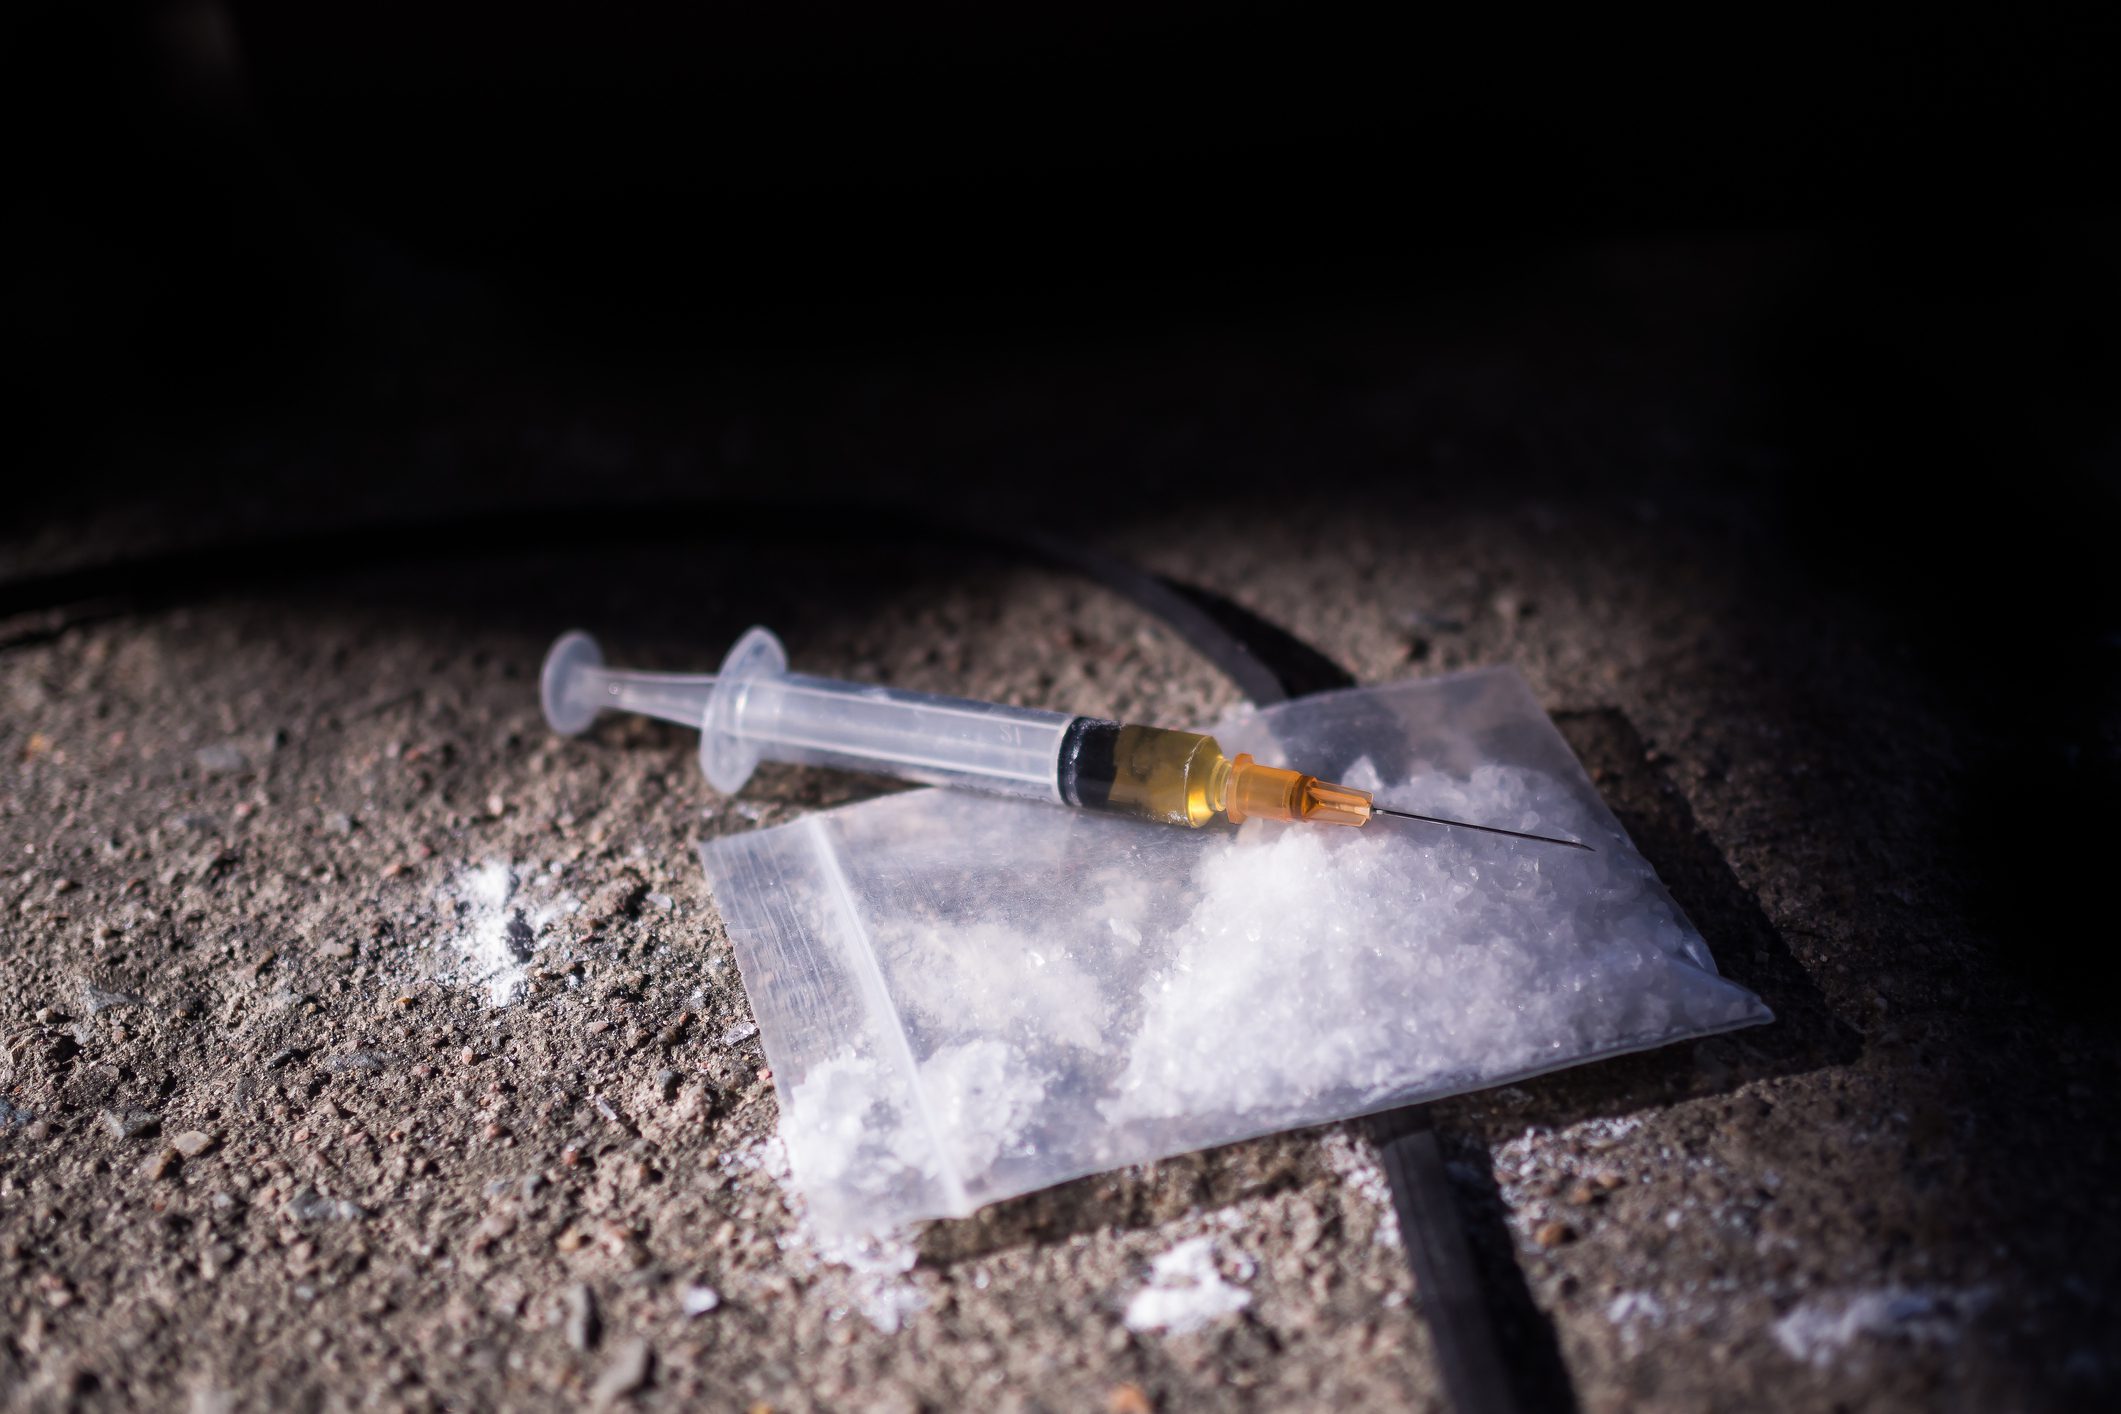 Amphetamine and syringe on black background. Substance abuse concept.copy space.